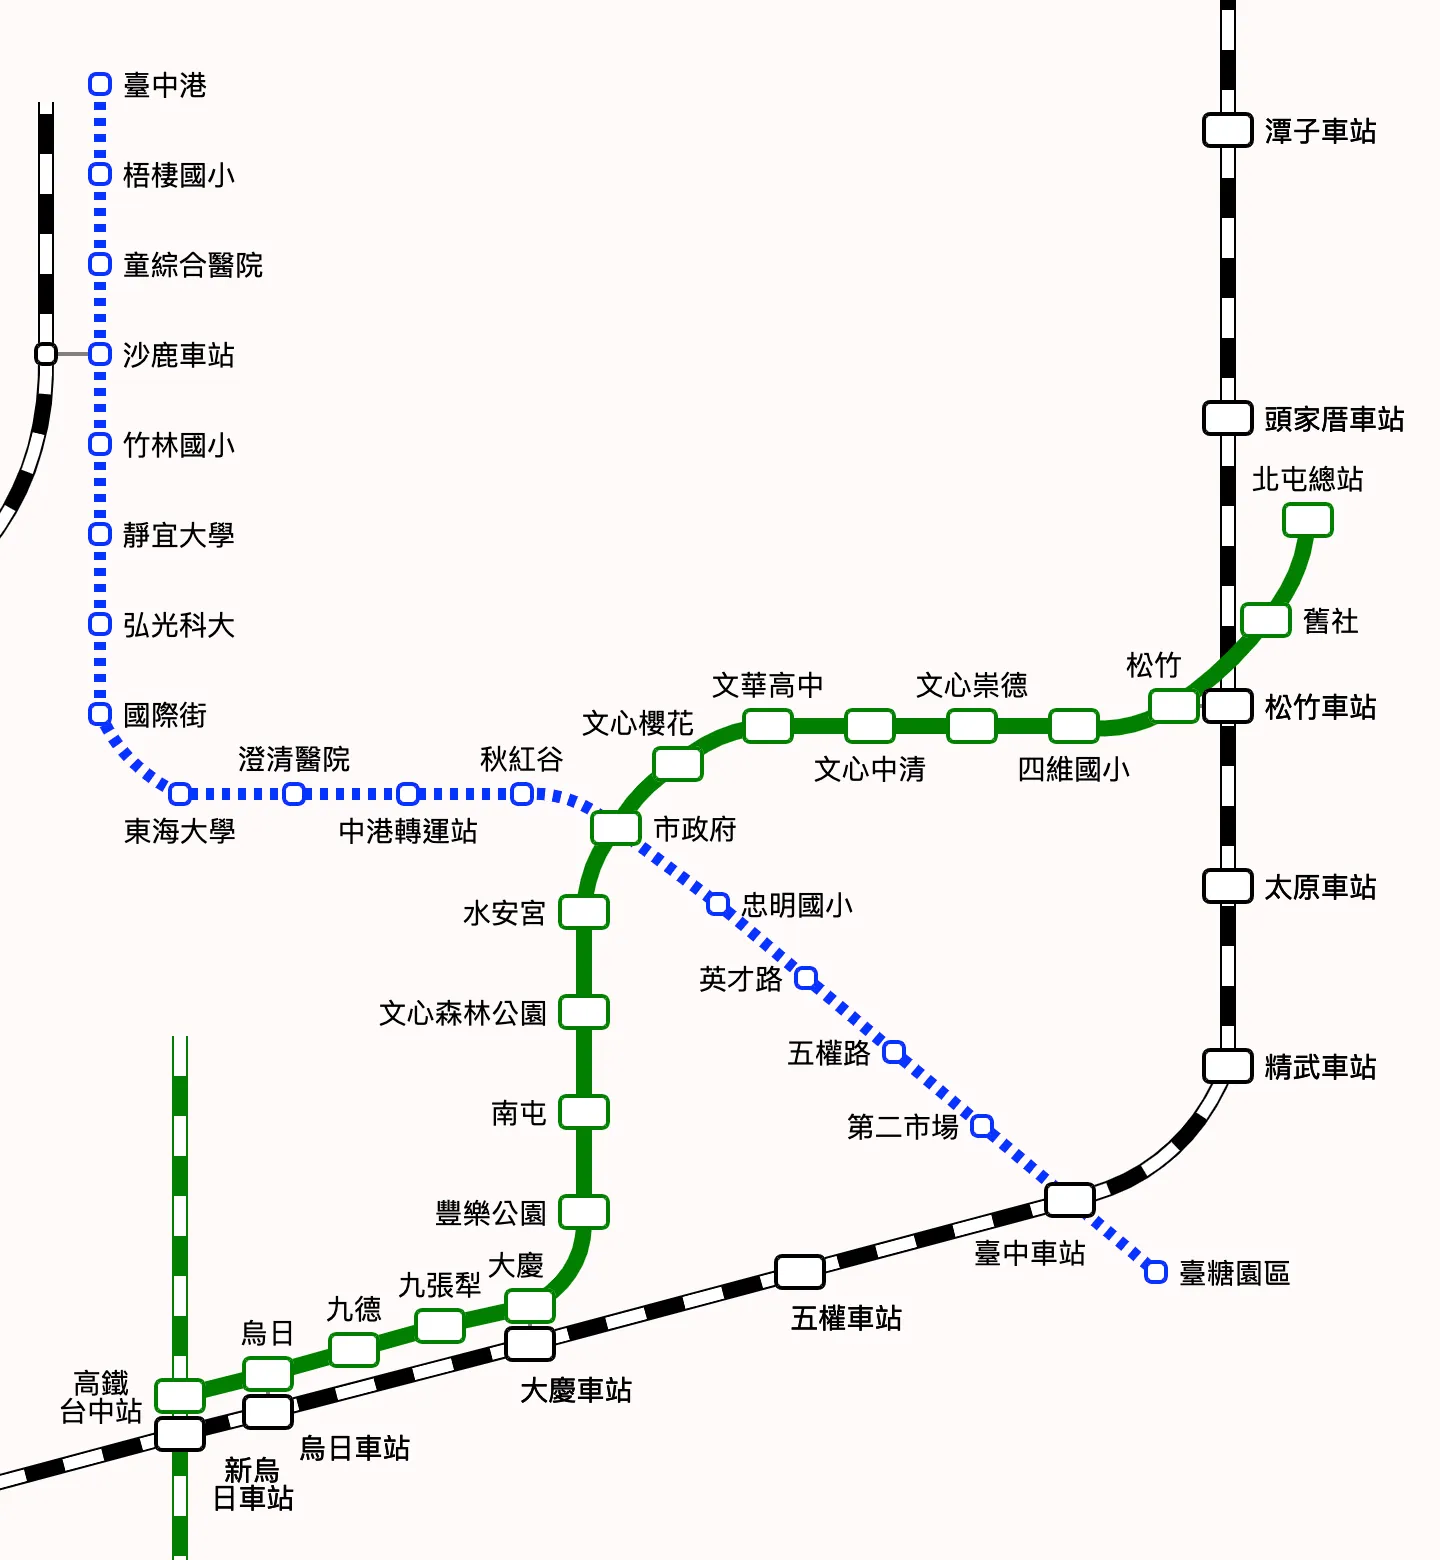 Taichung Mrt Map